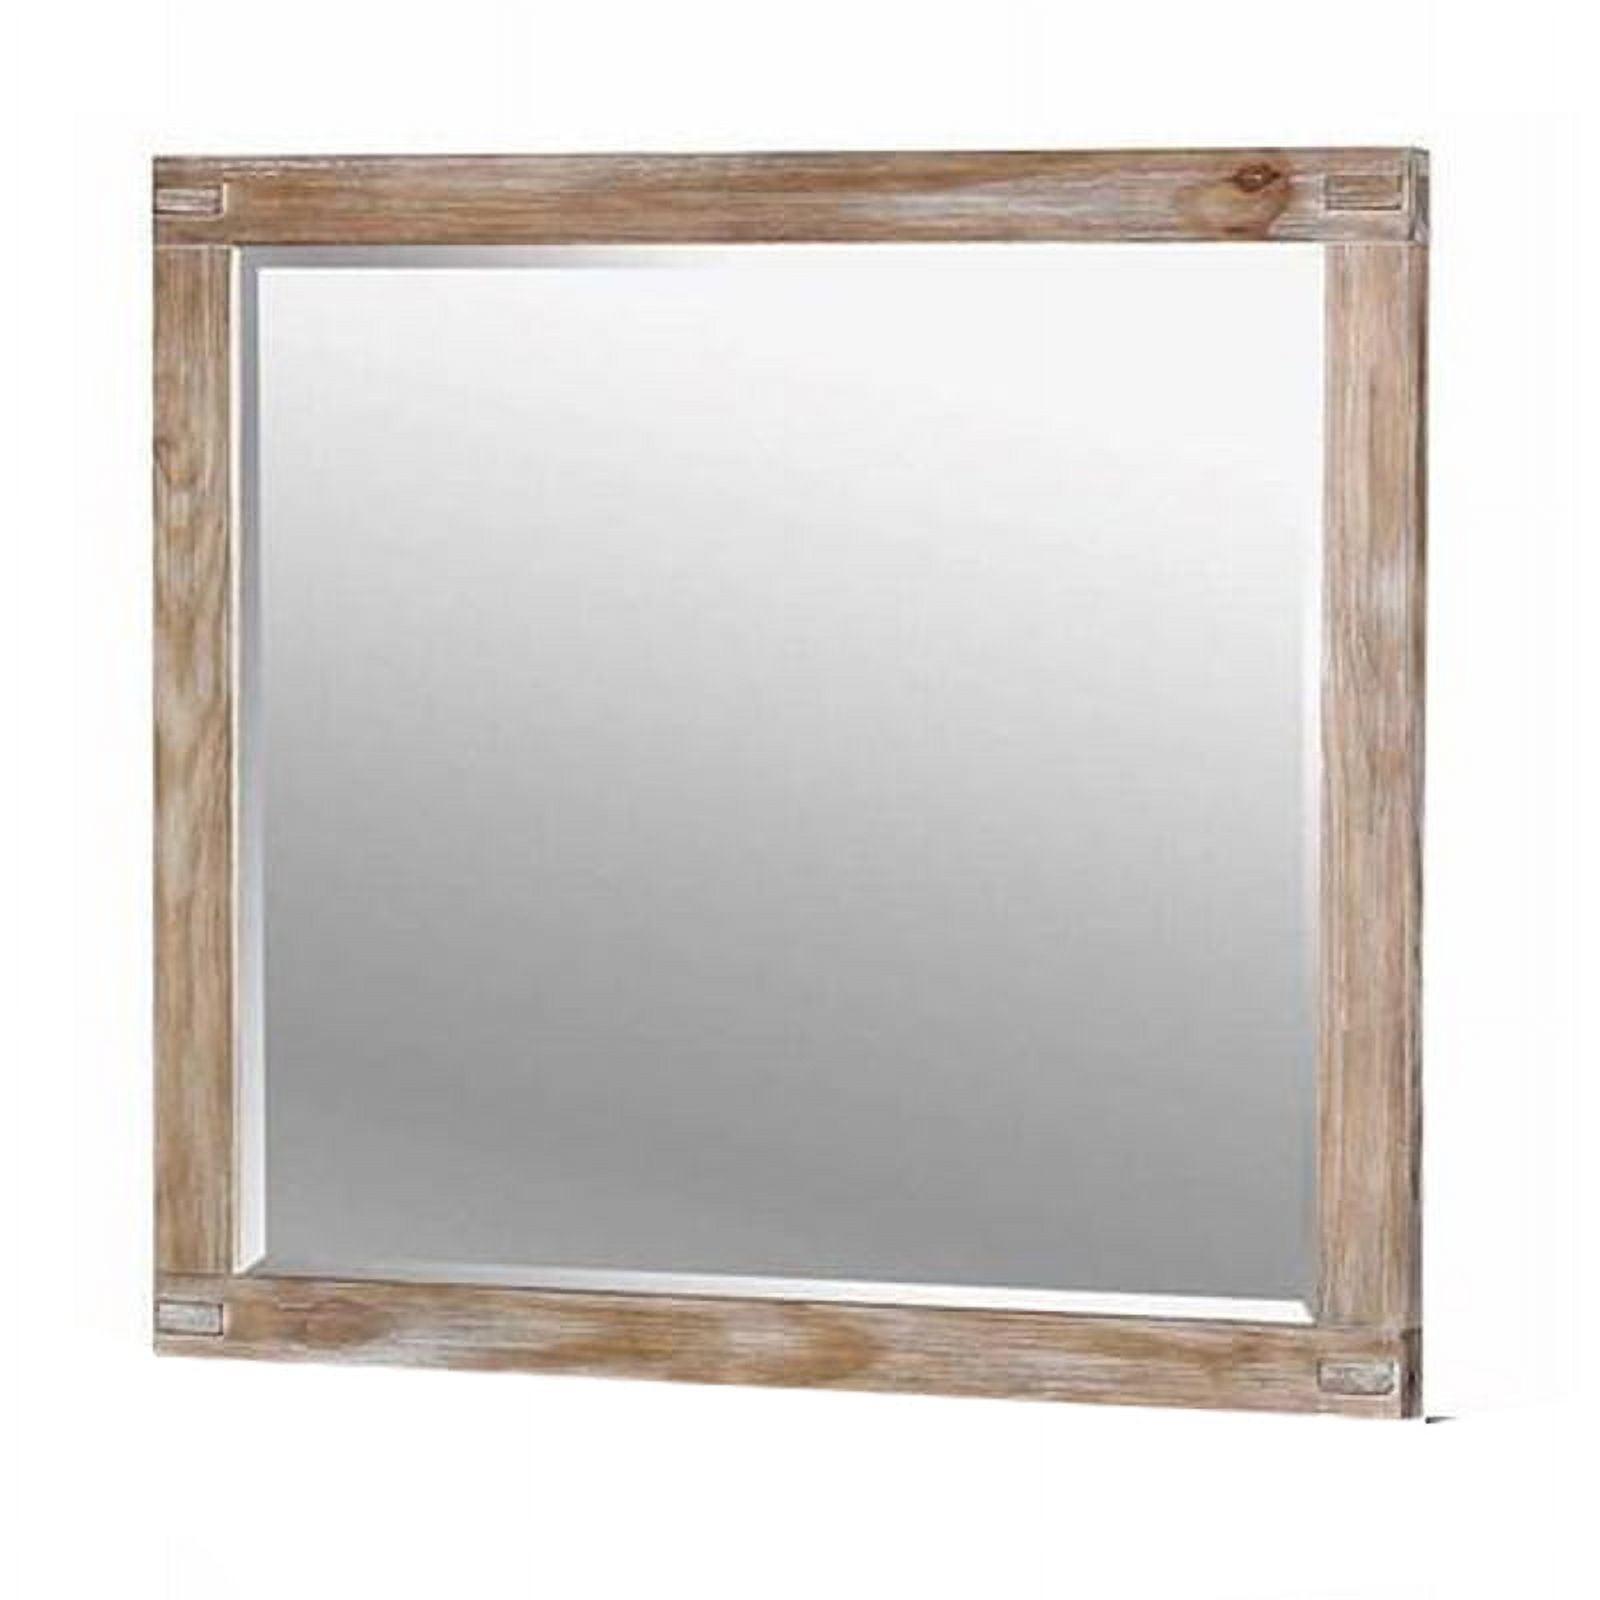 Transitional Full-Length Rectangular Brown Wood Mirror